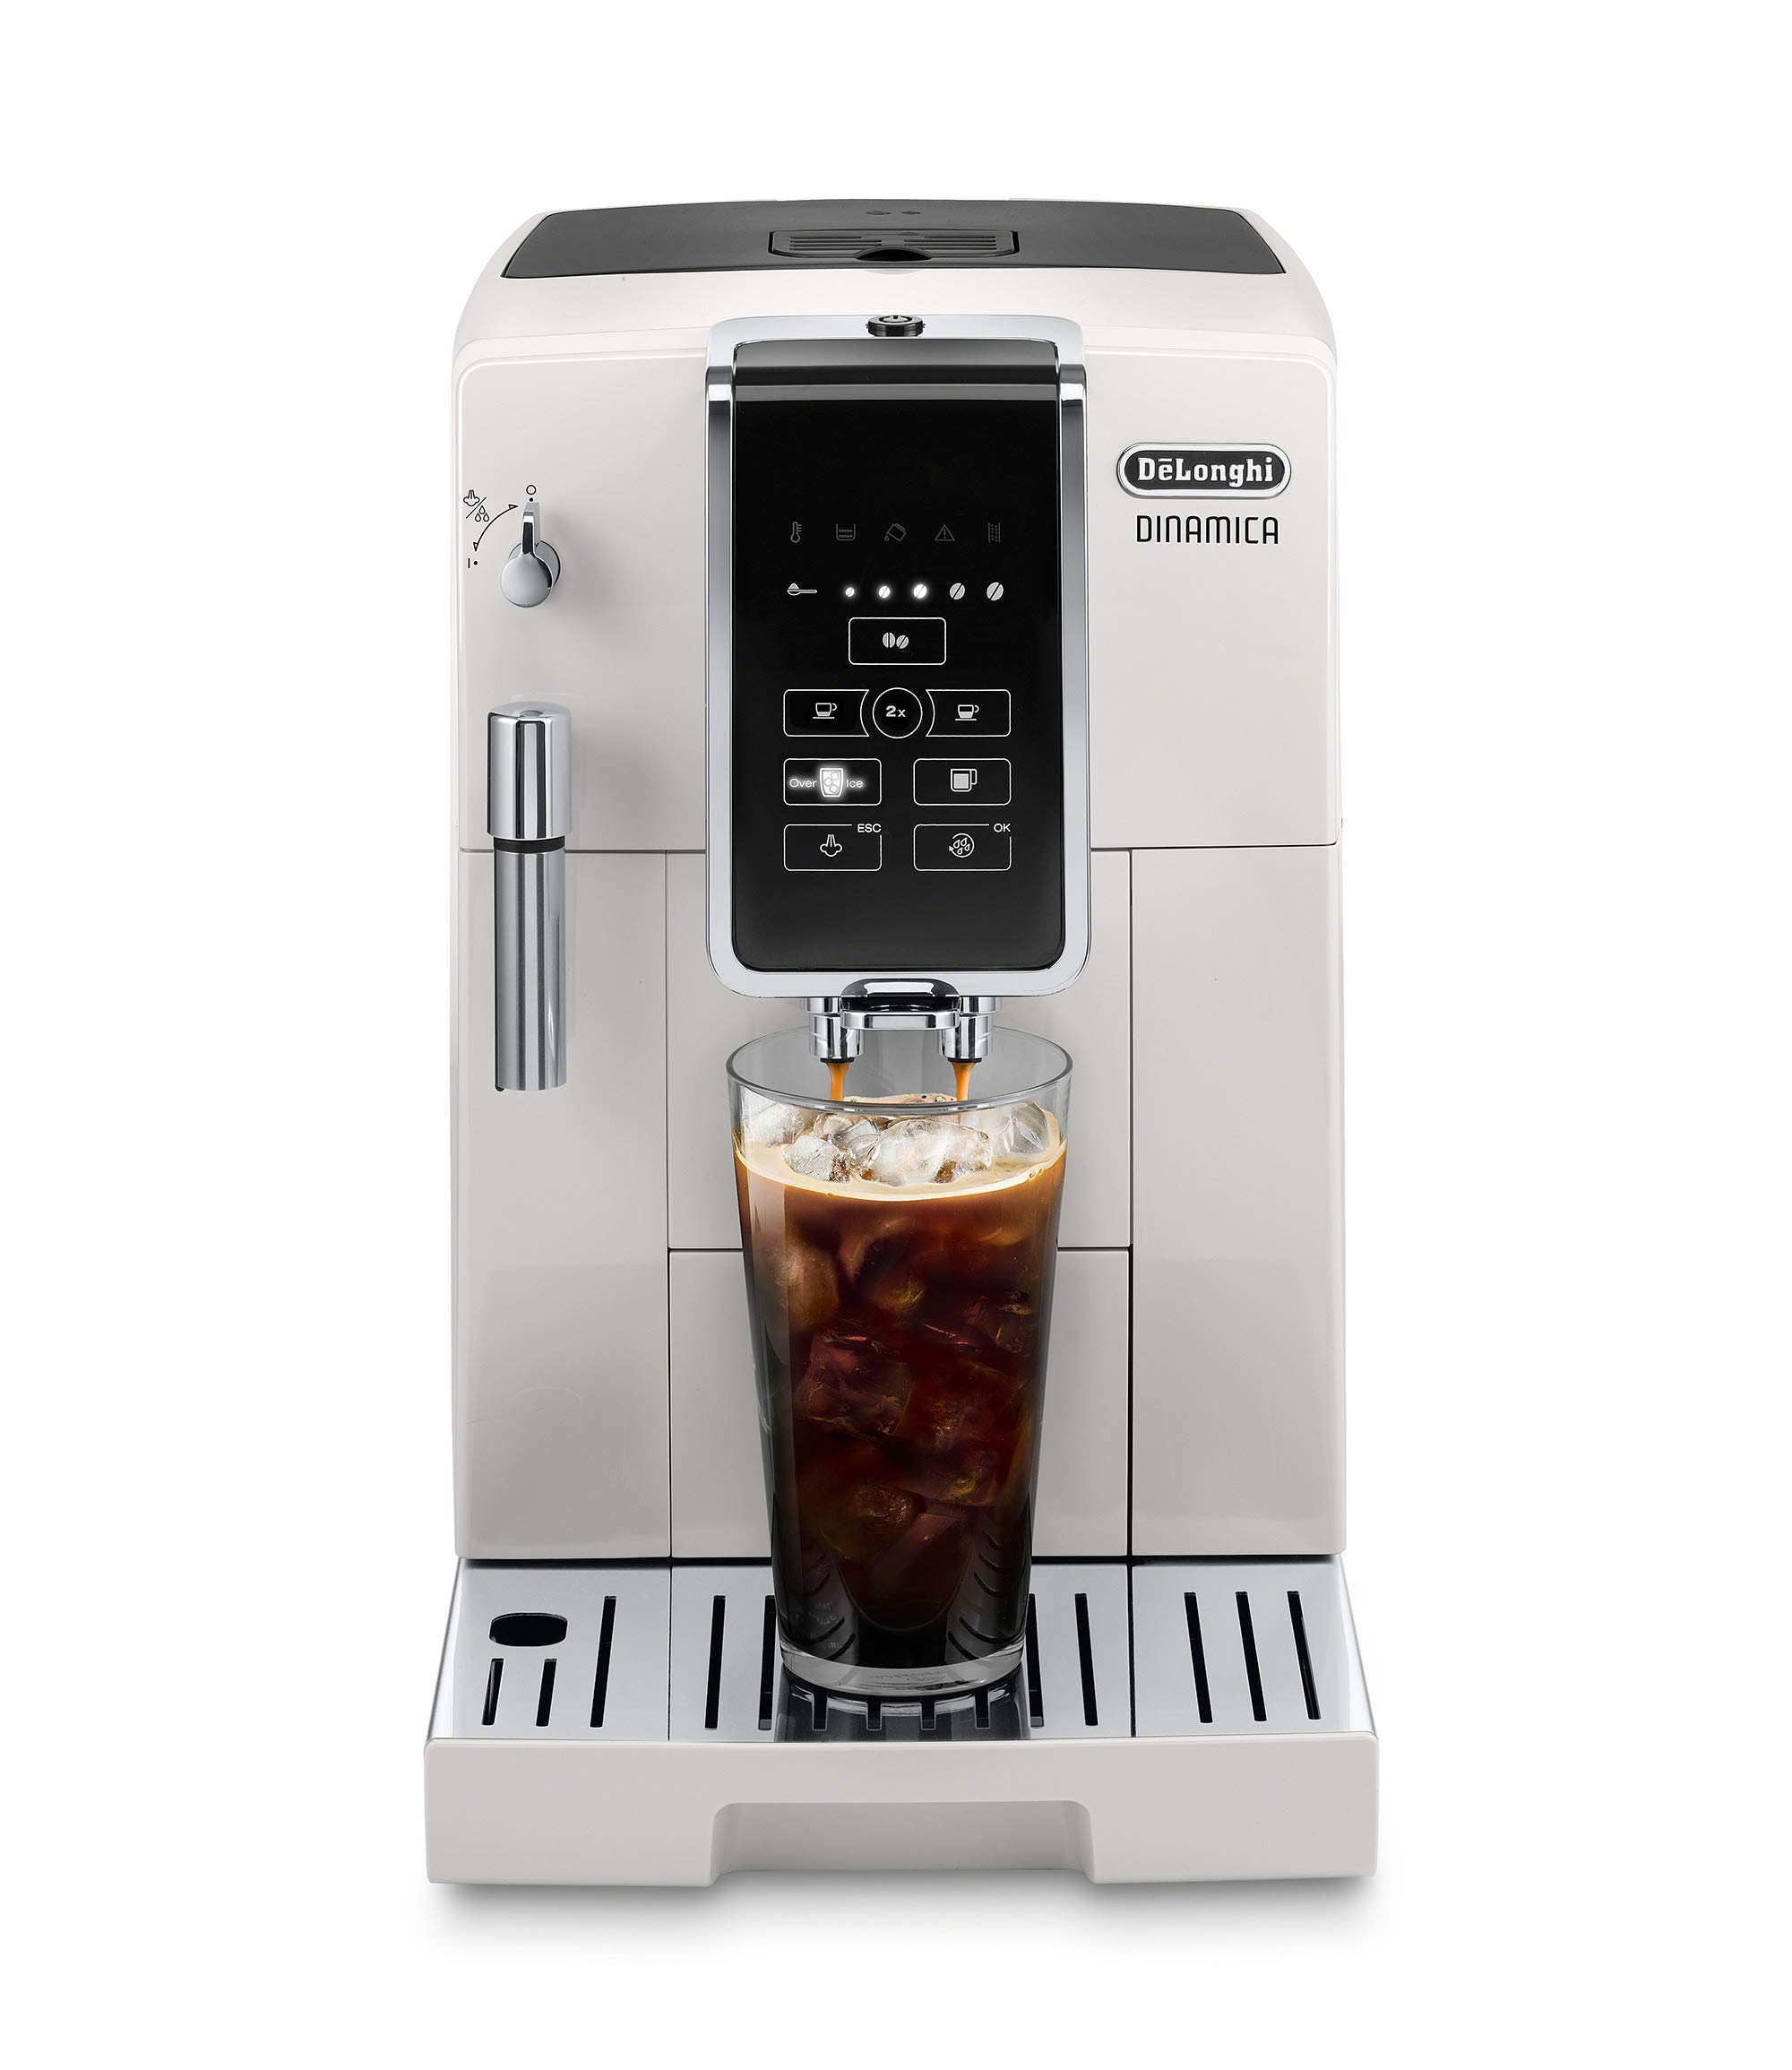 De'Longhi Dinamica Automatic Coffee & Espresso Machine, Iced-Coffee, Burr Grinder, (Renewed) (White)